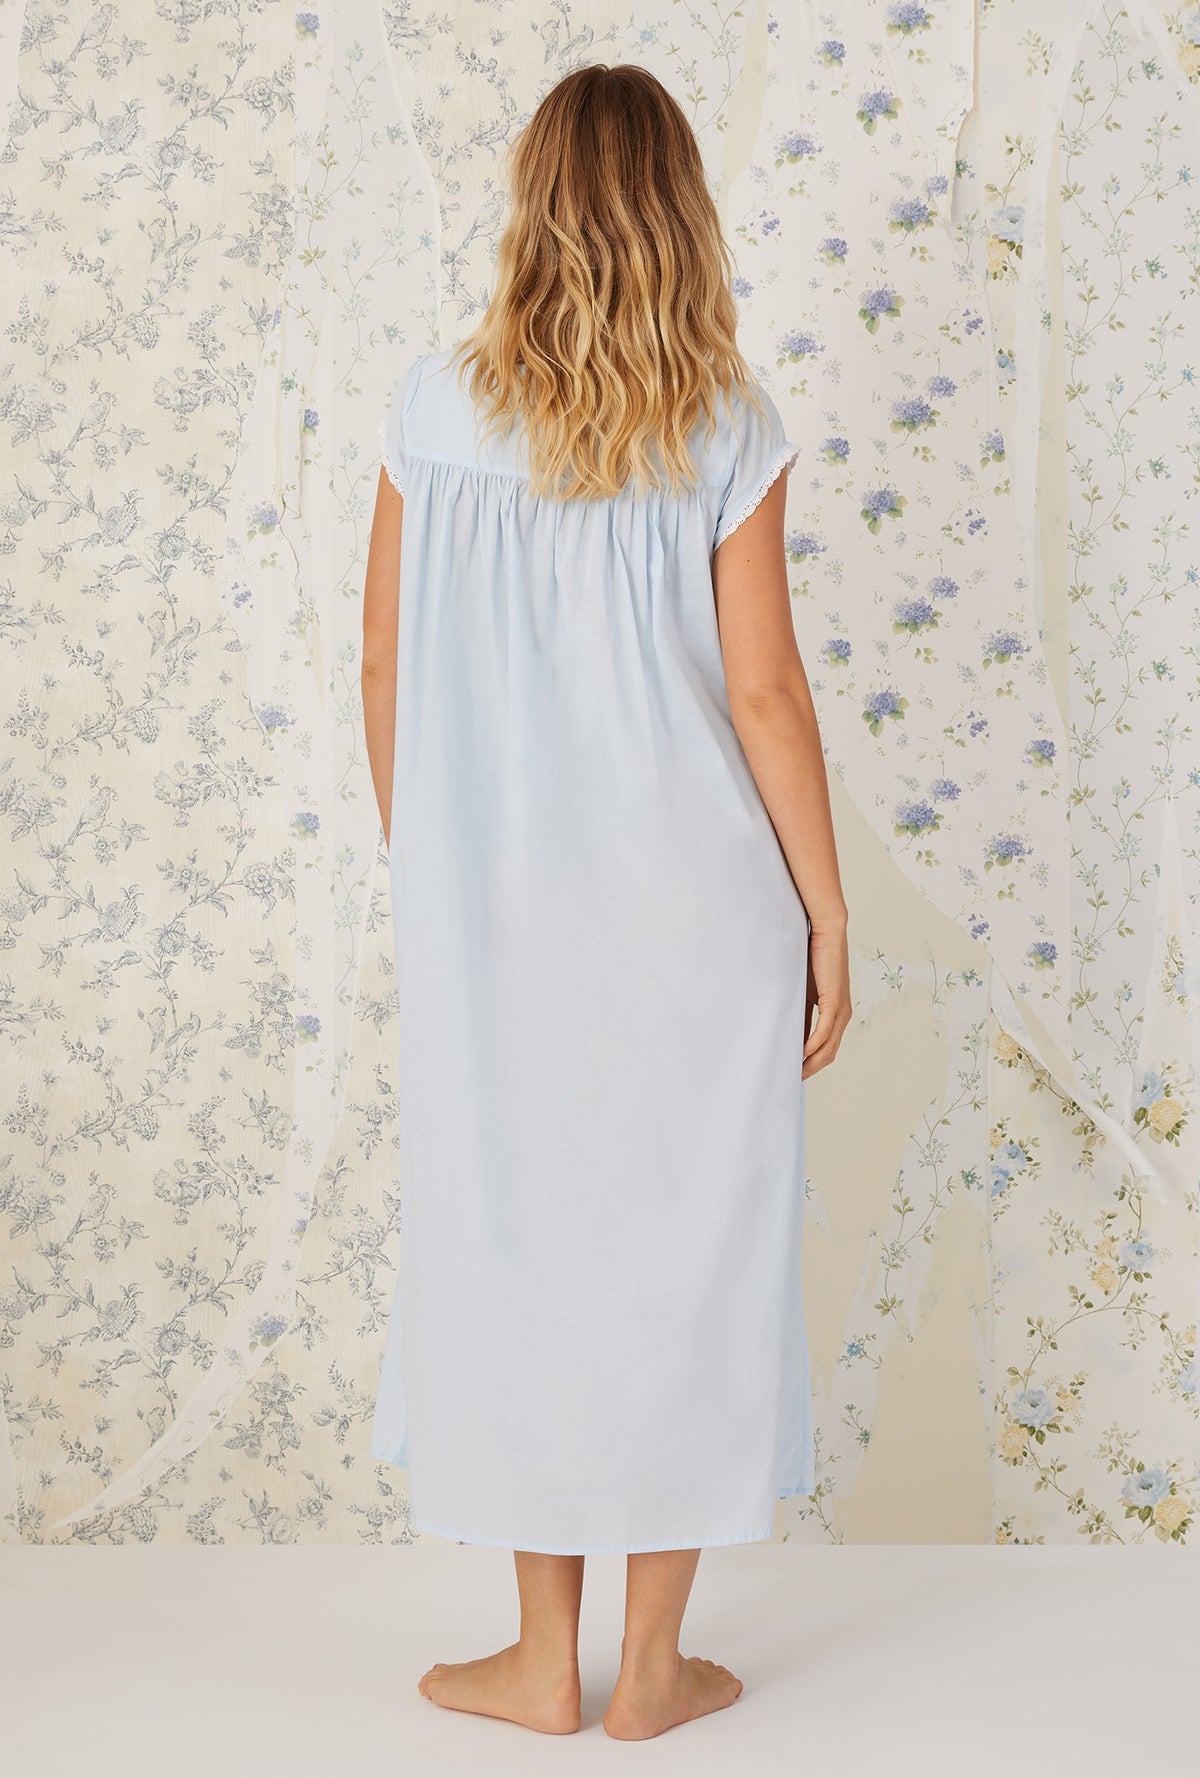 Florentine Lace Cap Sleeve Gown